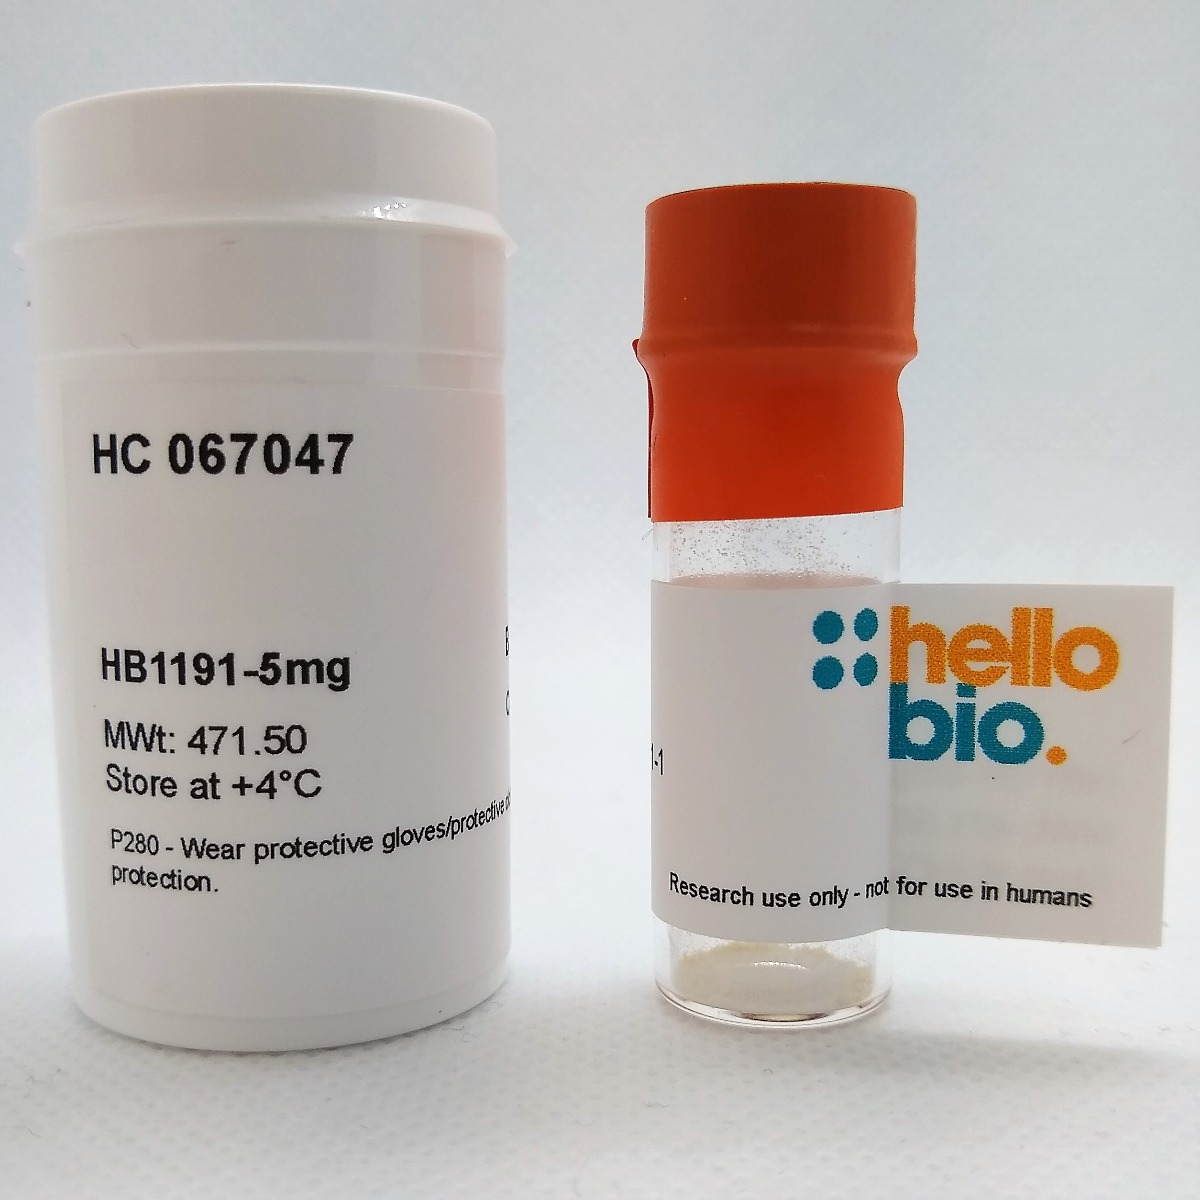 HC 067047 product vial image | Hello Bio